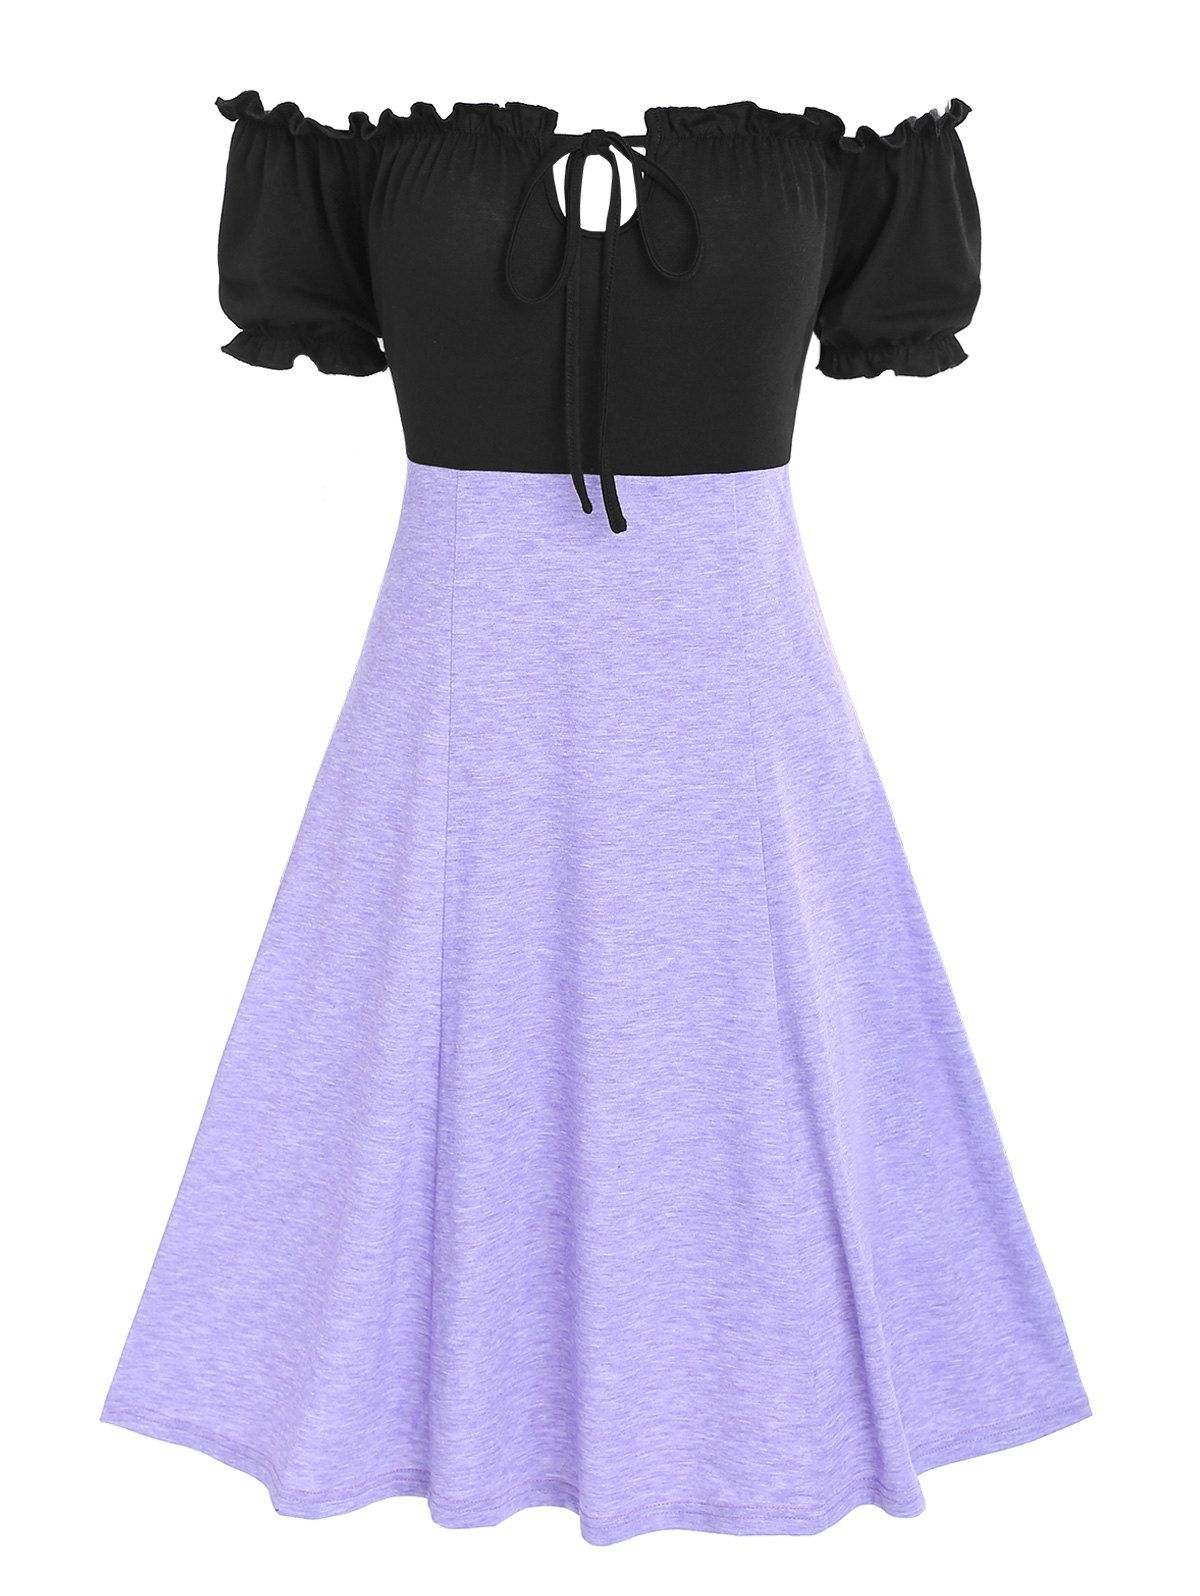 Contrast Bicolor Colorblock Off Shoulder Puff Sleeve Frilled A Line Dress - LIGHT PURPLE XXXL